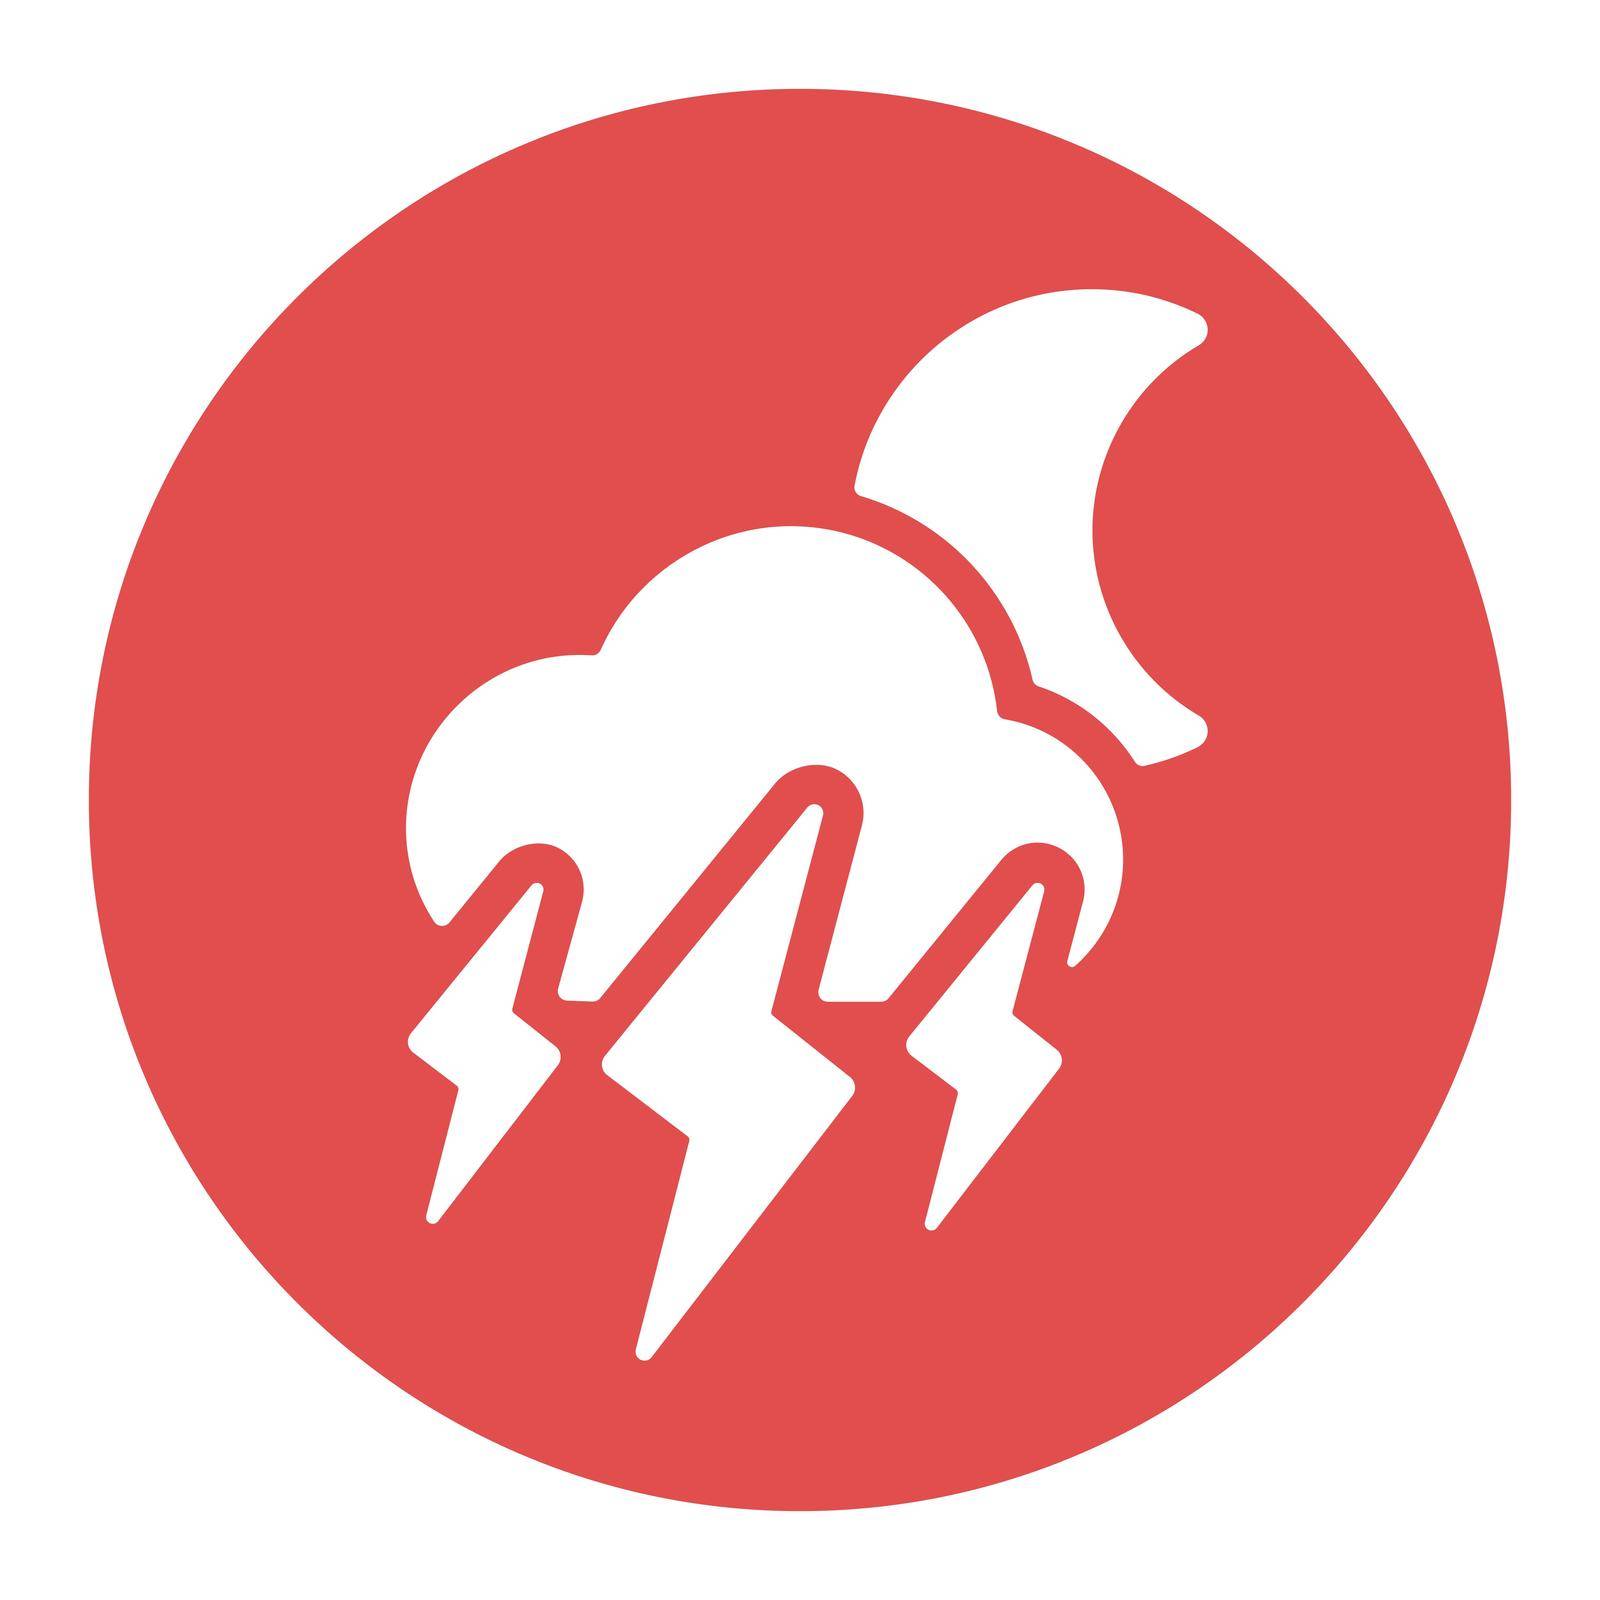 Moon storm cloud glyph icon. Rainstorm symbol by nosik